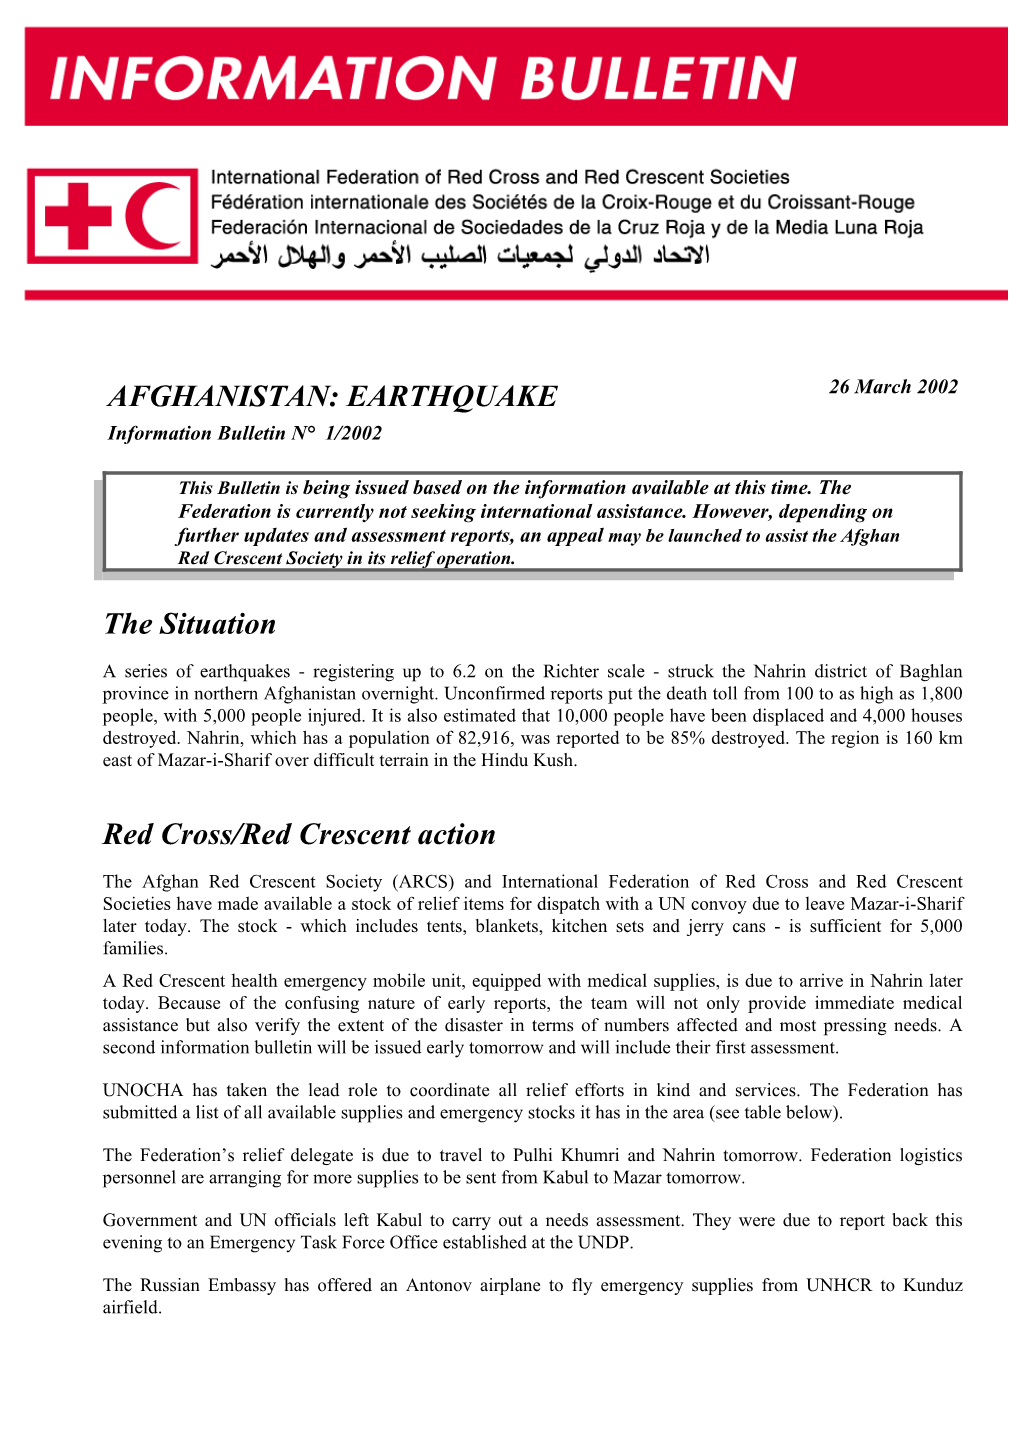 Afghanistan Earthquake Information Bulletin No.1